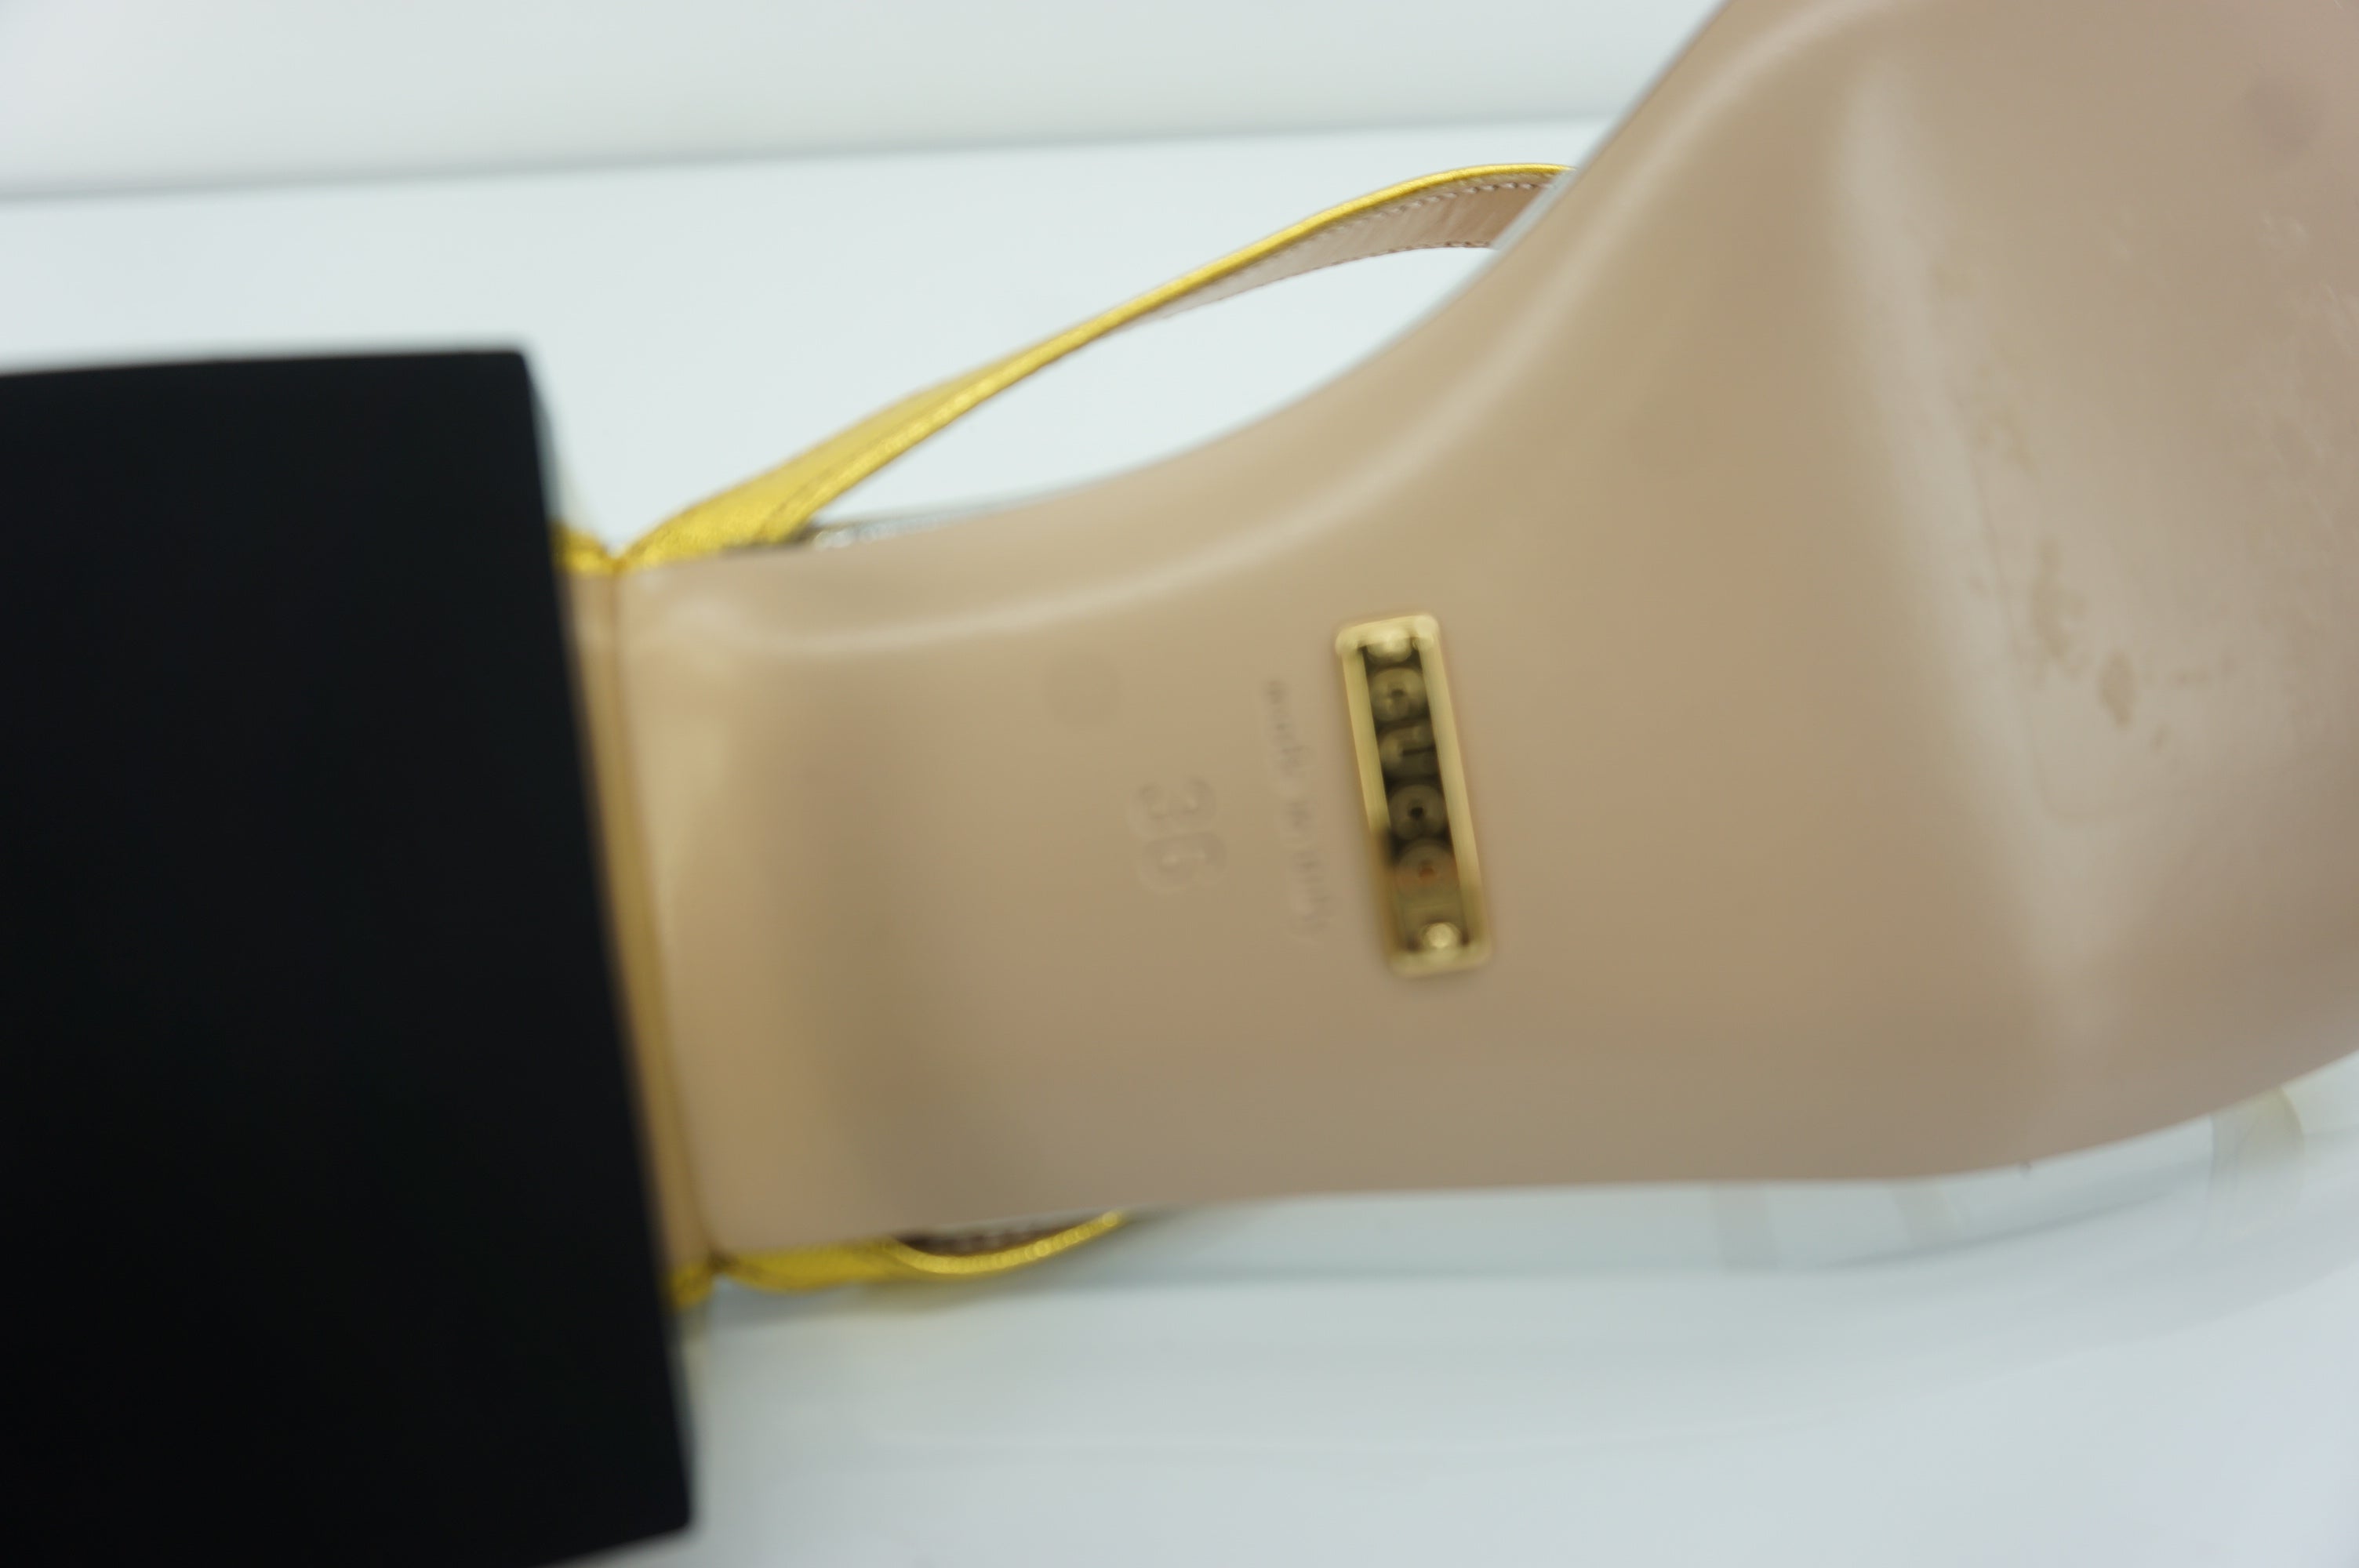 Gucci Alison Bow Gold Silver Strappy Metallic Sandals Size 35 NIB $750 Logo